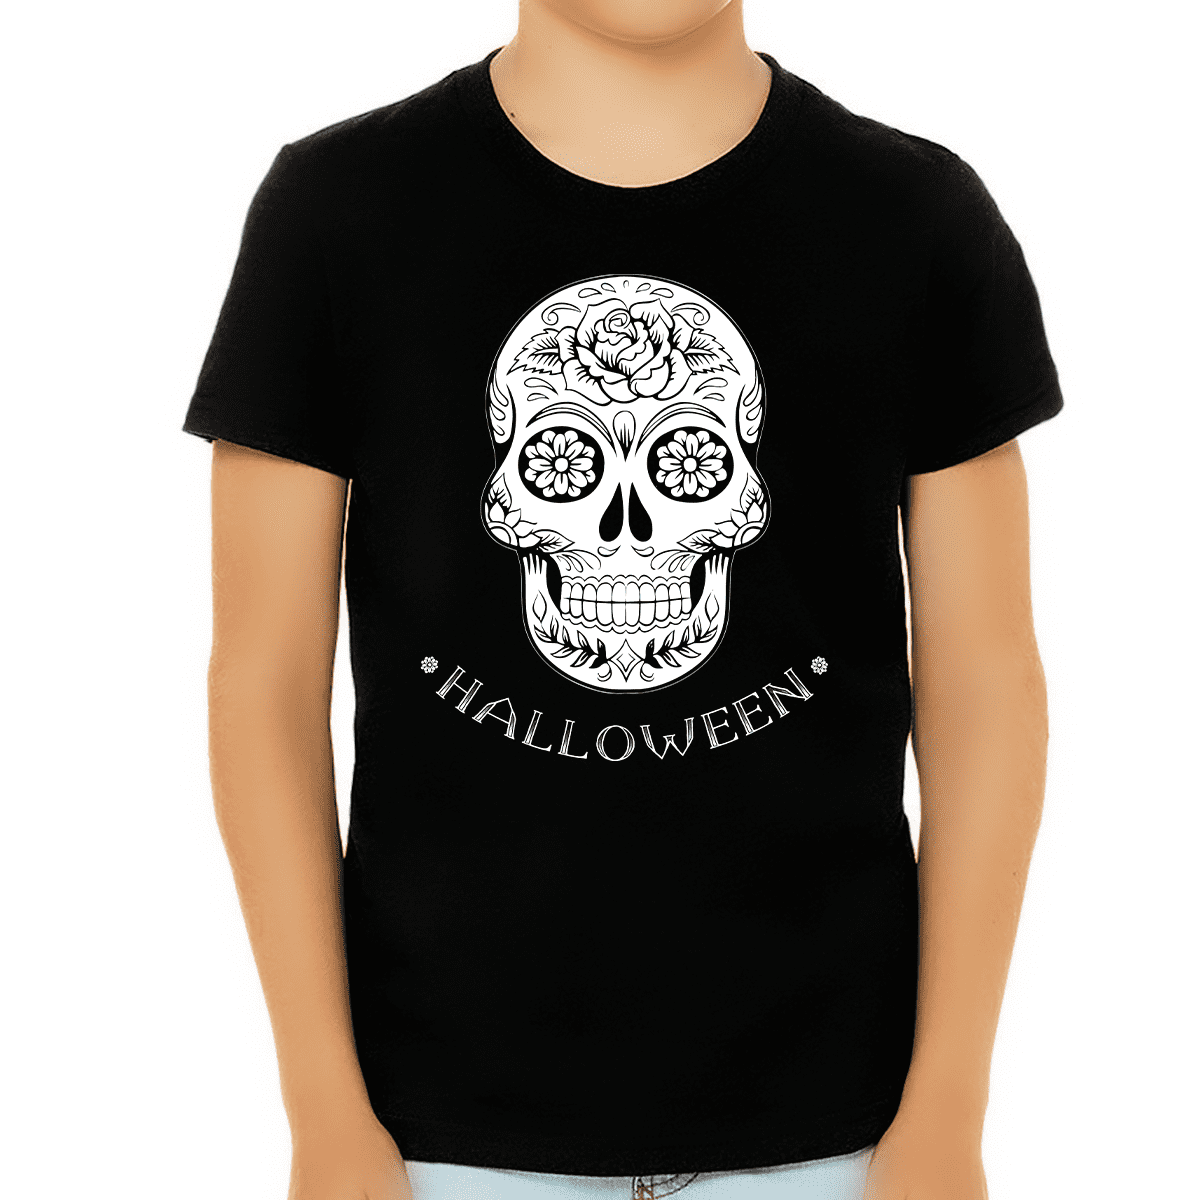 I've got your back Spooky Funny skeleton Halloween shirt Short-Sleeve Unisex T-Shirt